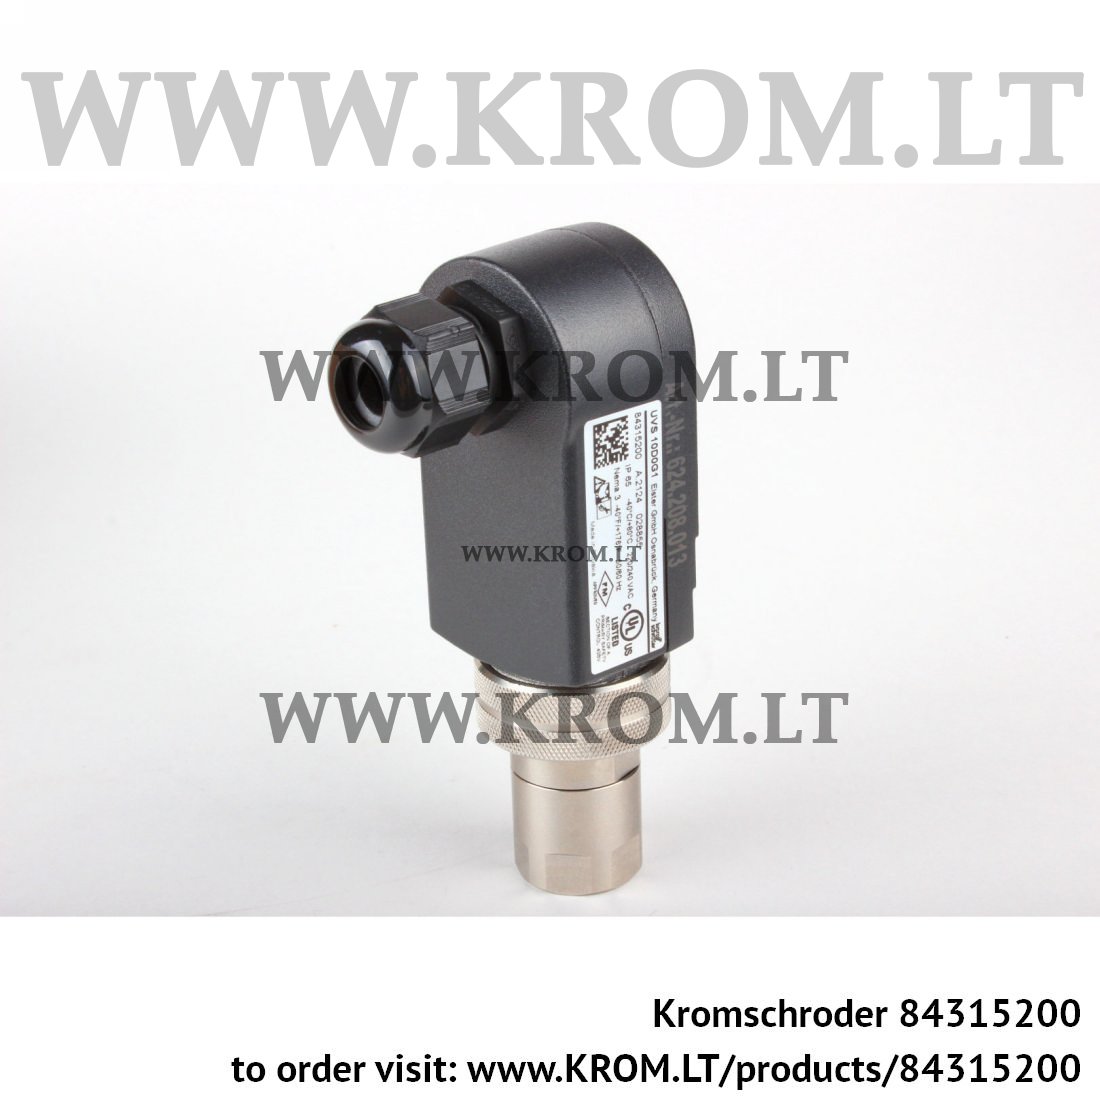 Kromschroder UVS 10D0G1, 84315200 uv flame sensor | Online store